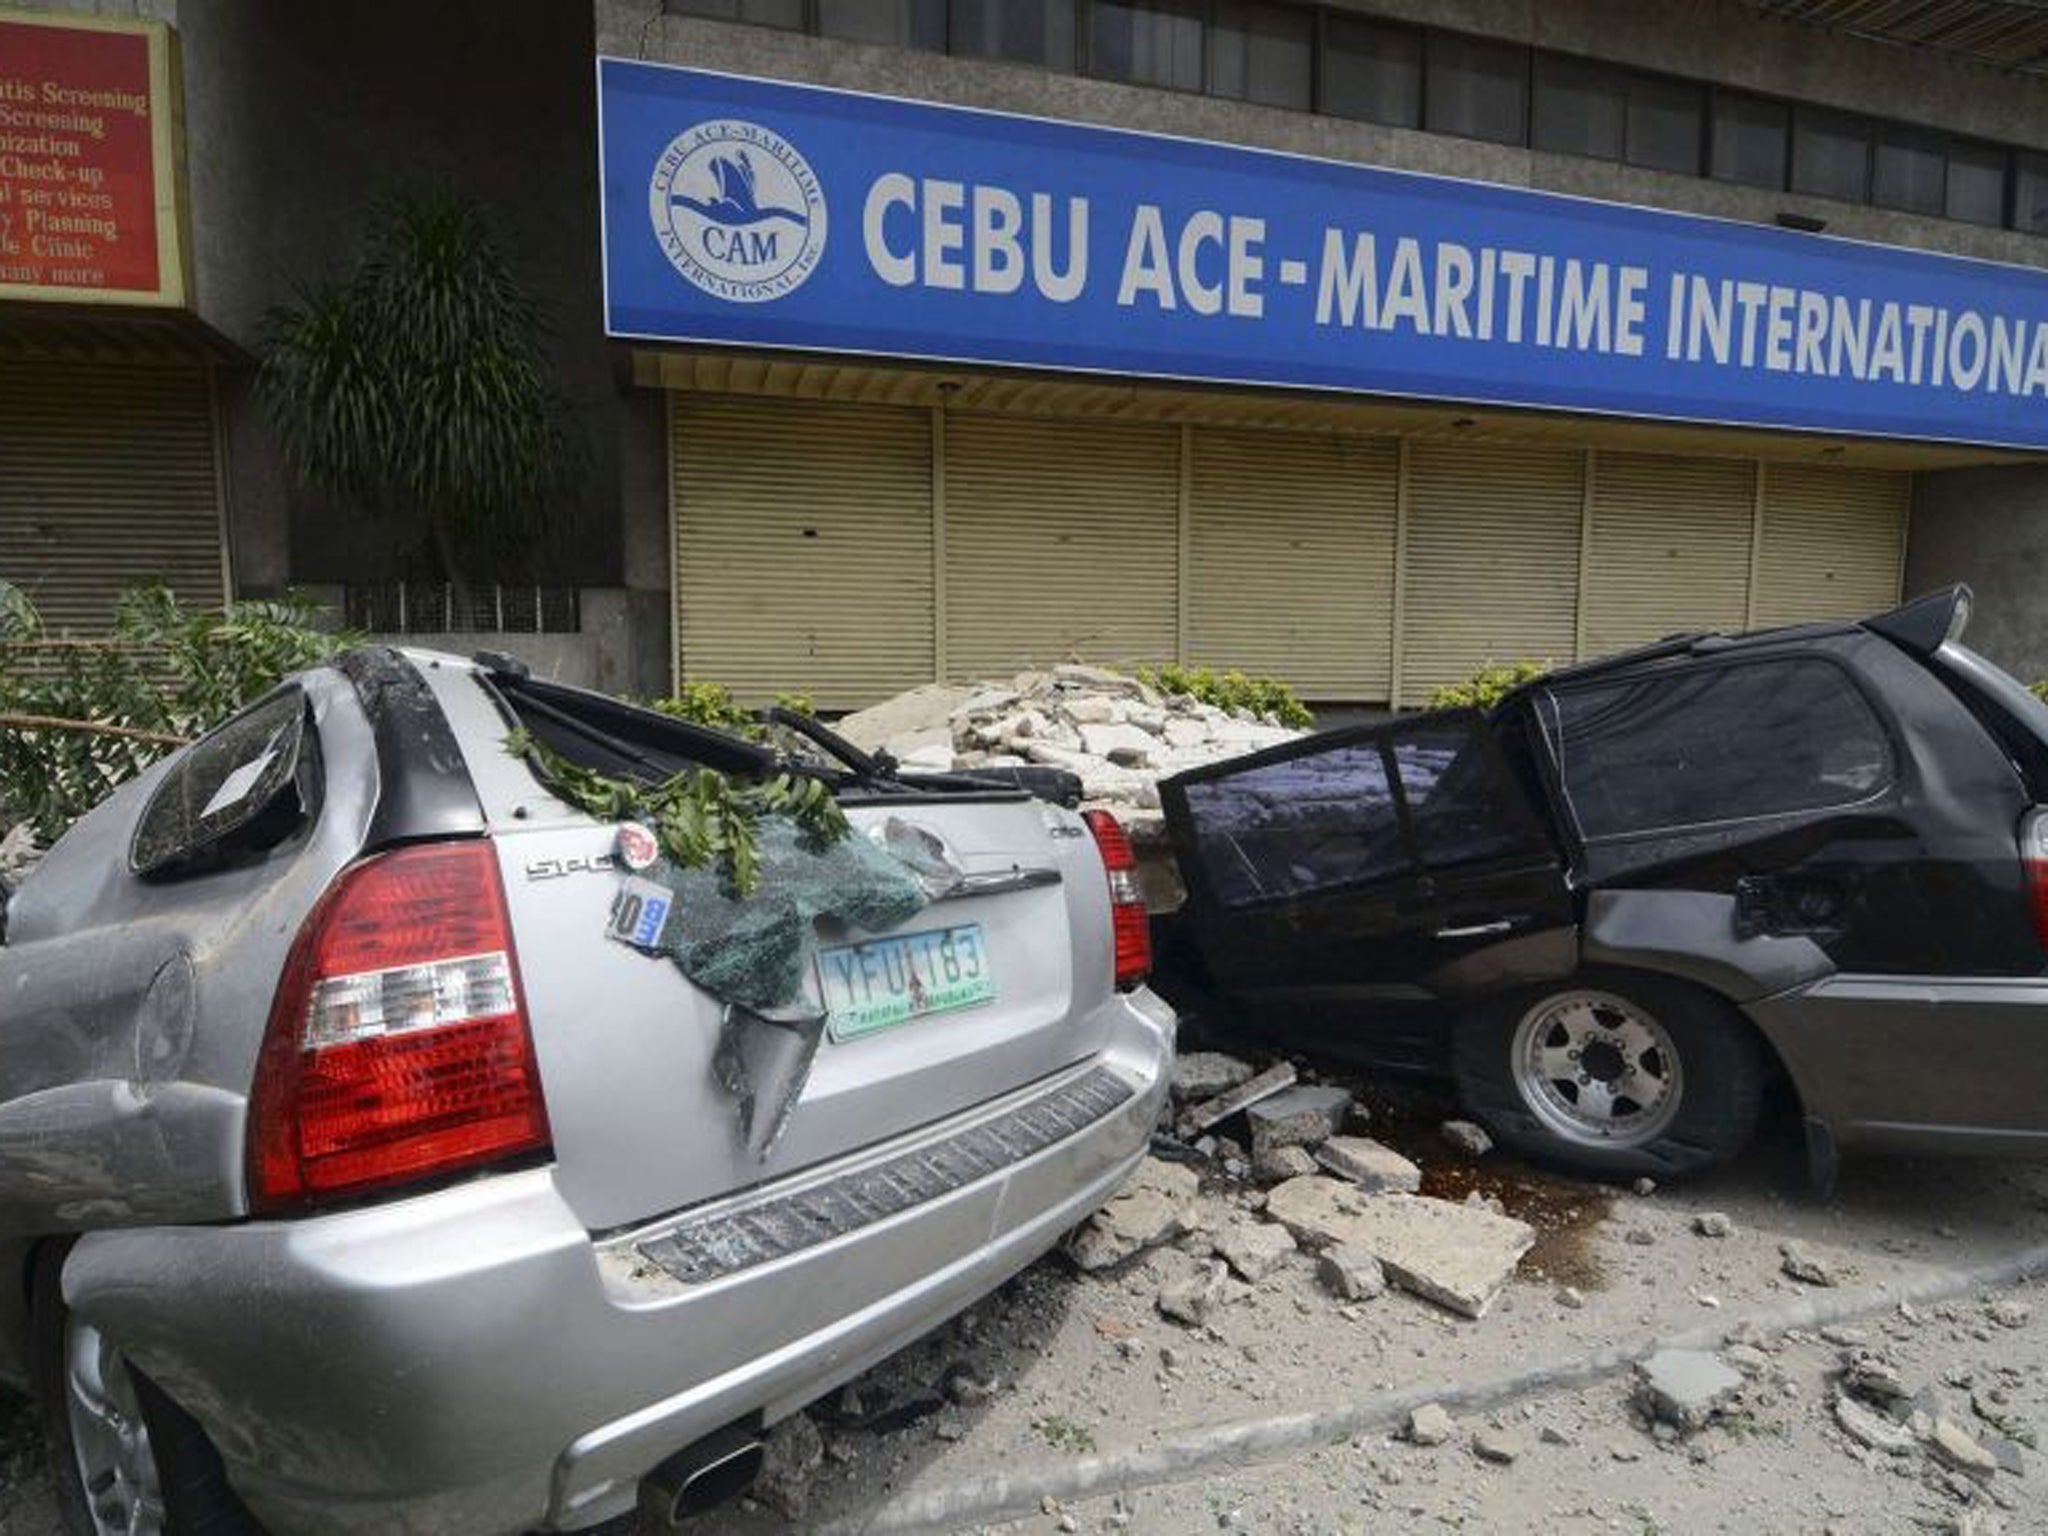 Vehicles damaged by falling debris after an earthquake struck Cebu city